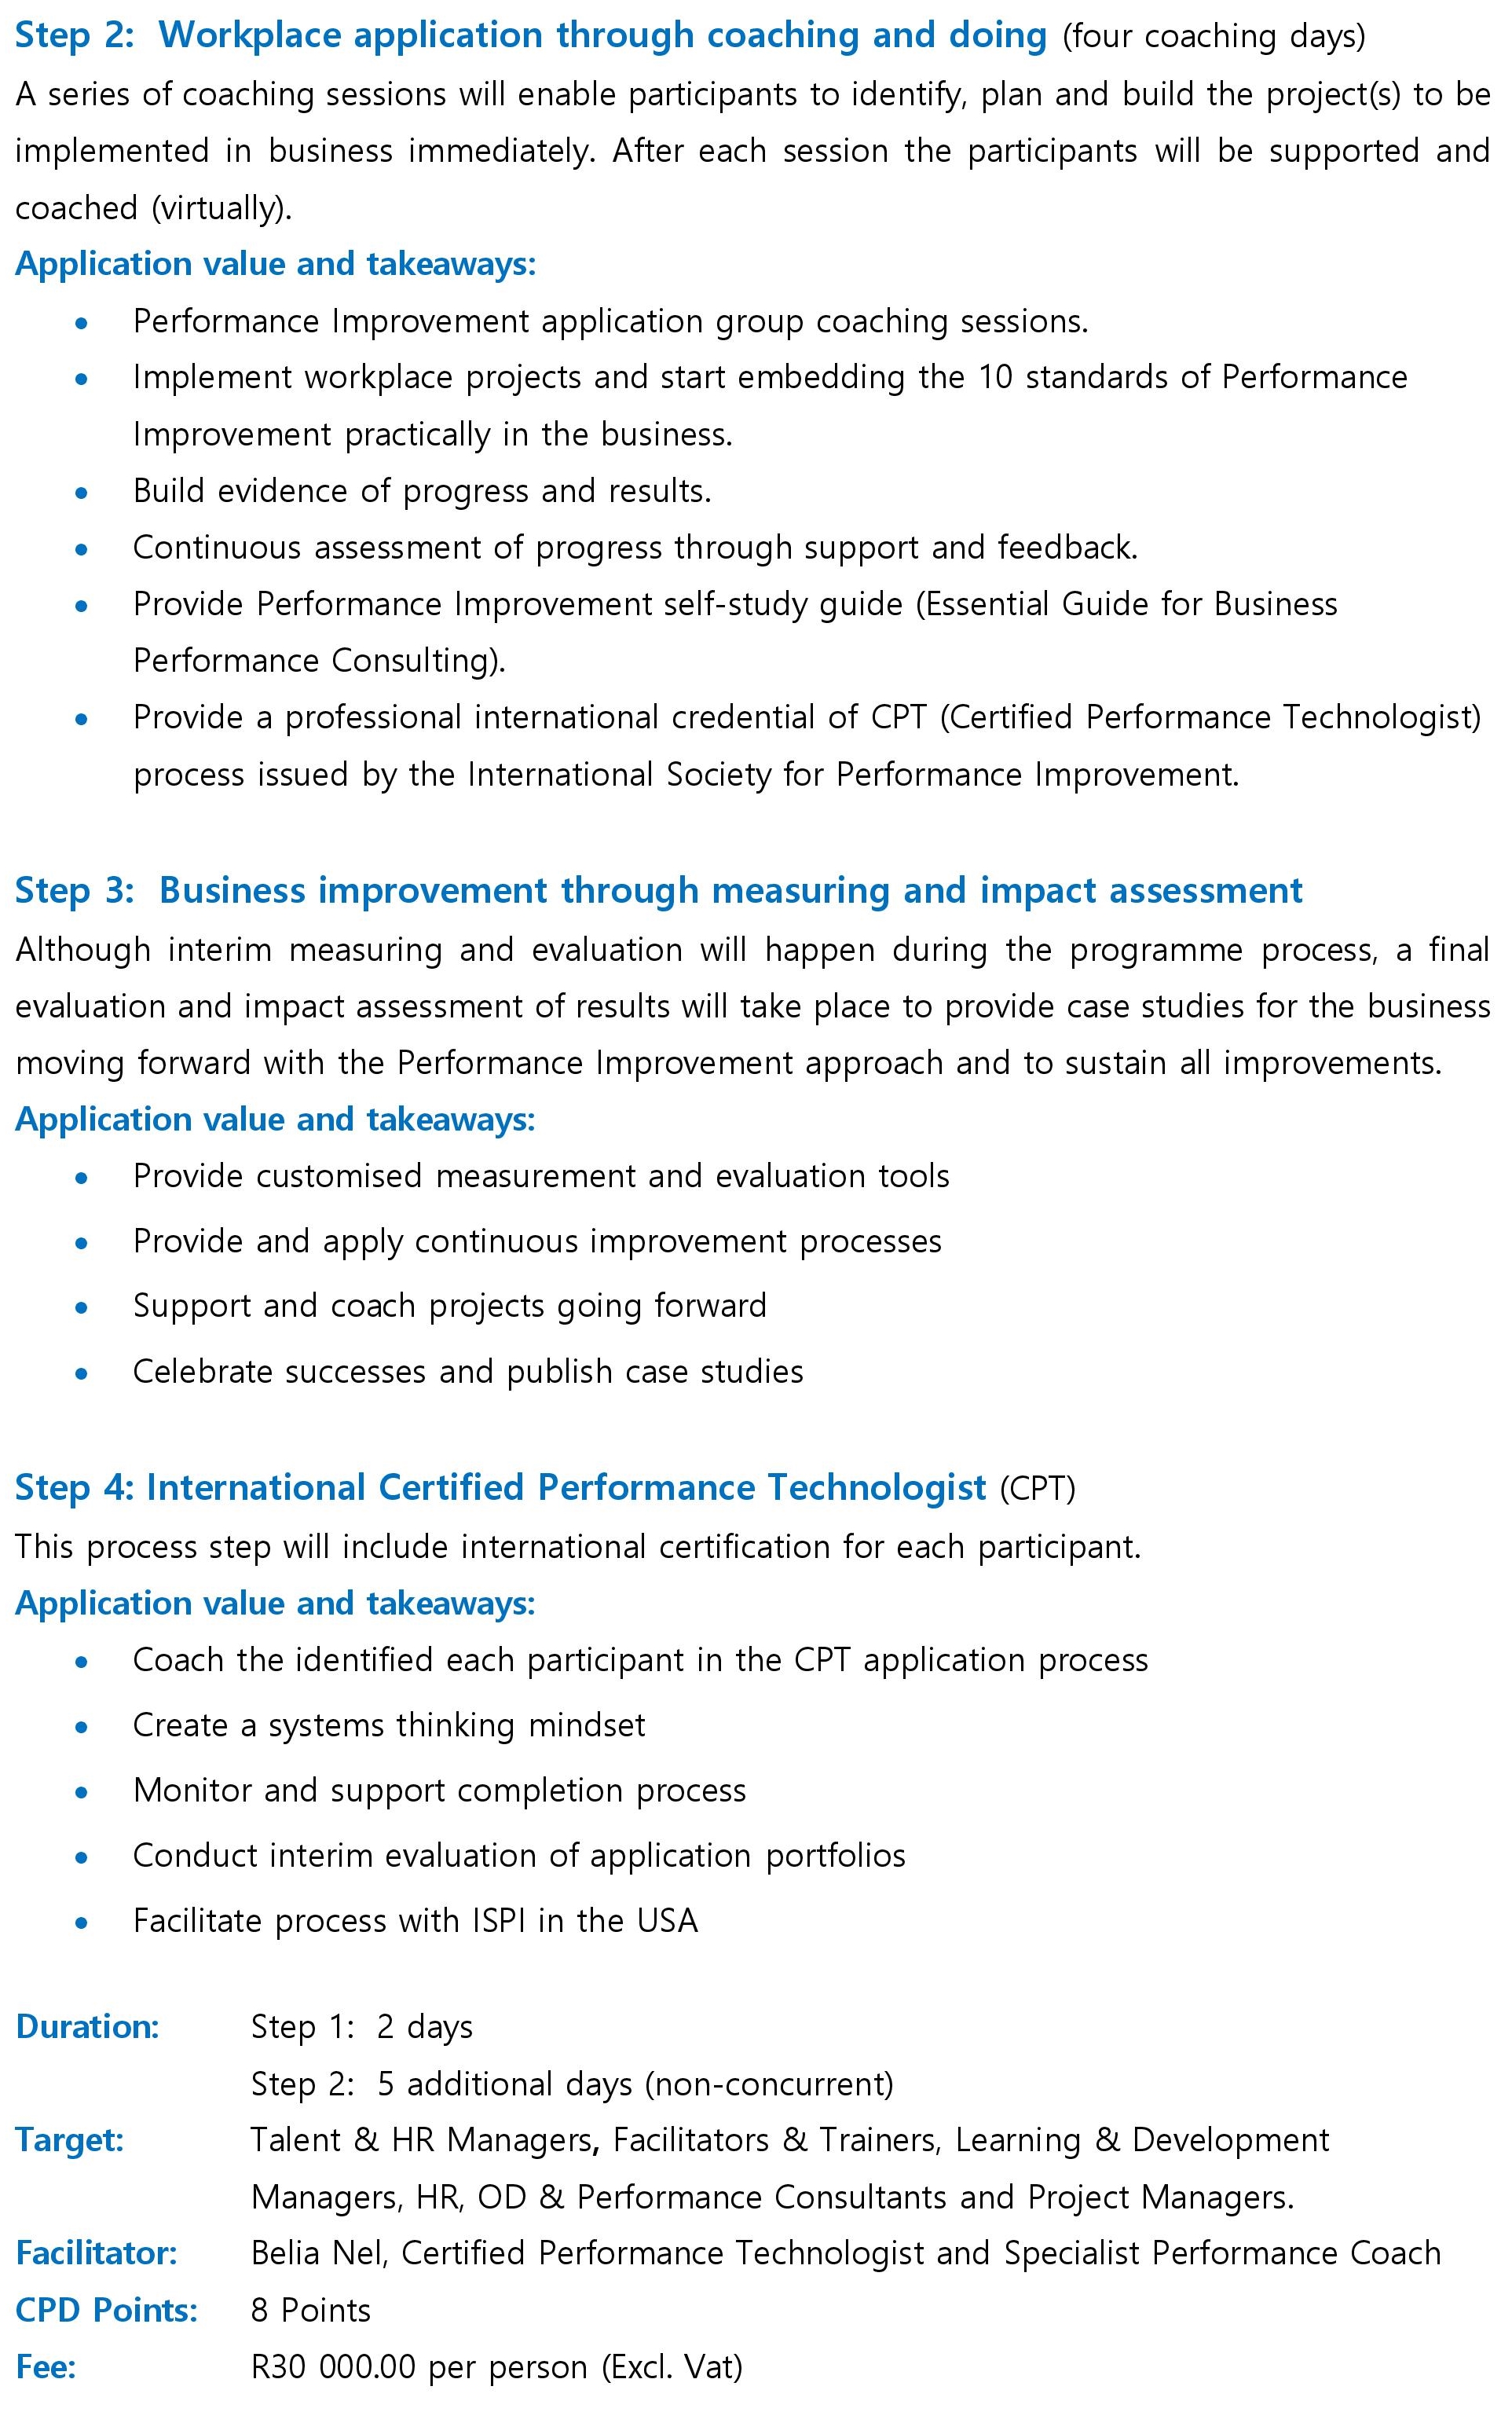 Performance Consulting Development Programme & international certification .docx - IPM-page-002.jpg